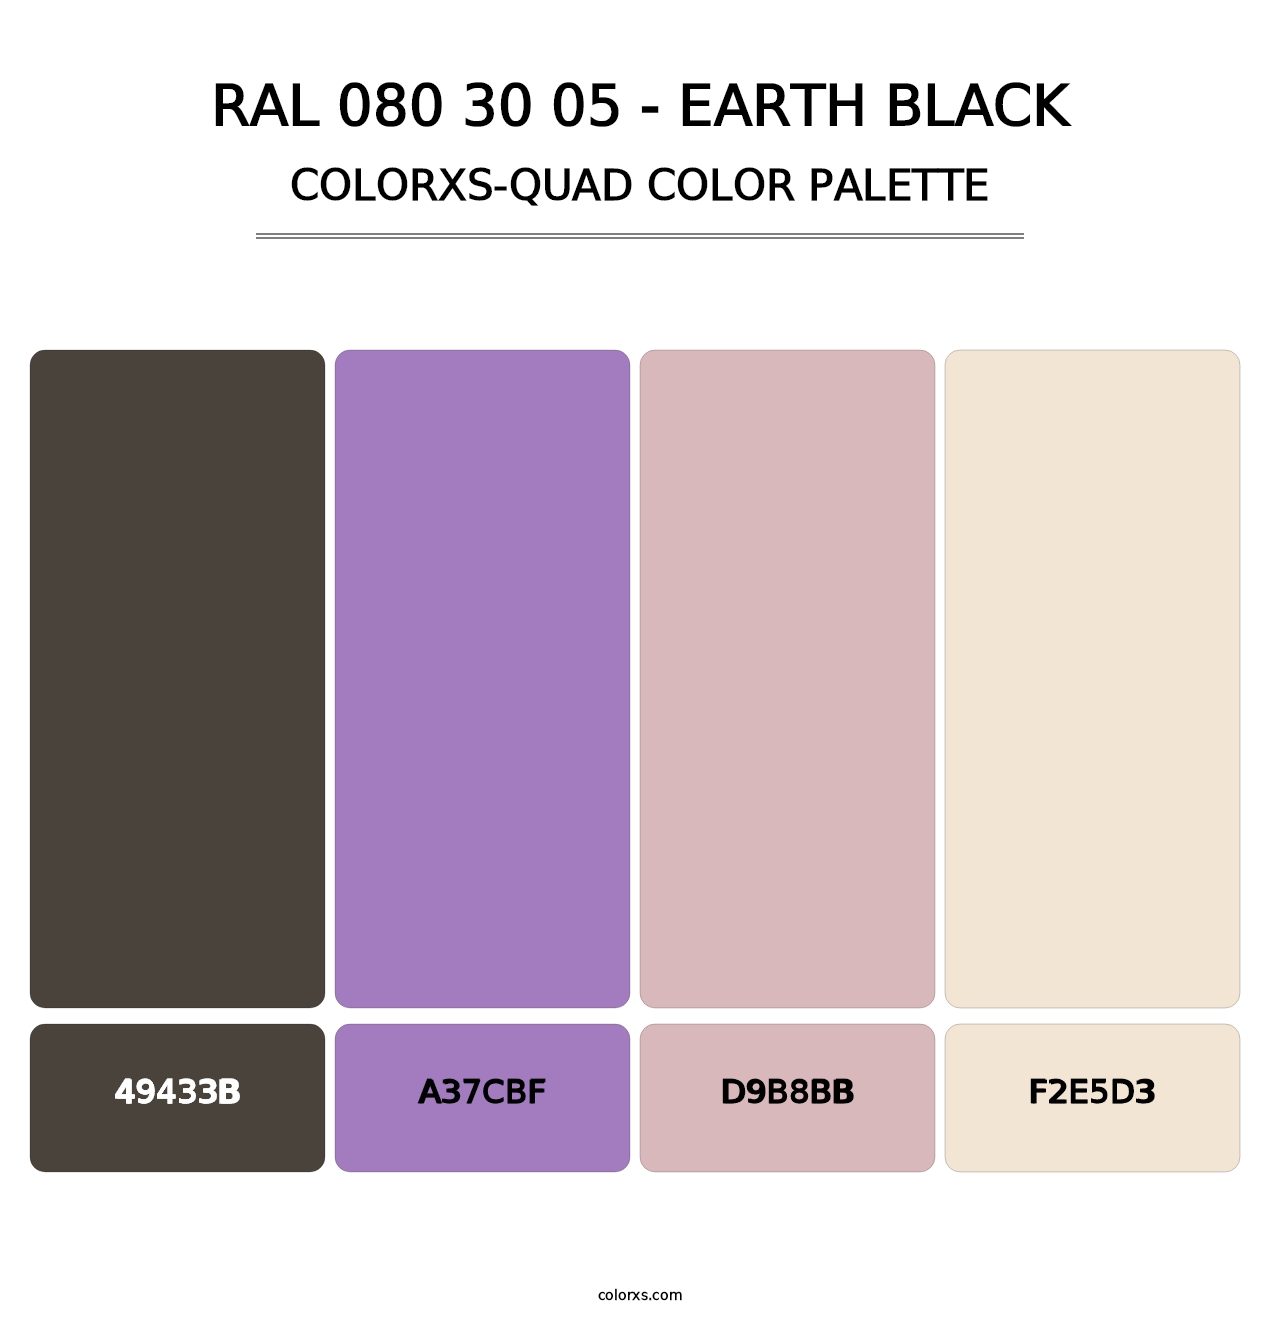 RAL 080 30 05 - Earth Black - Colorxs Quad Palette